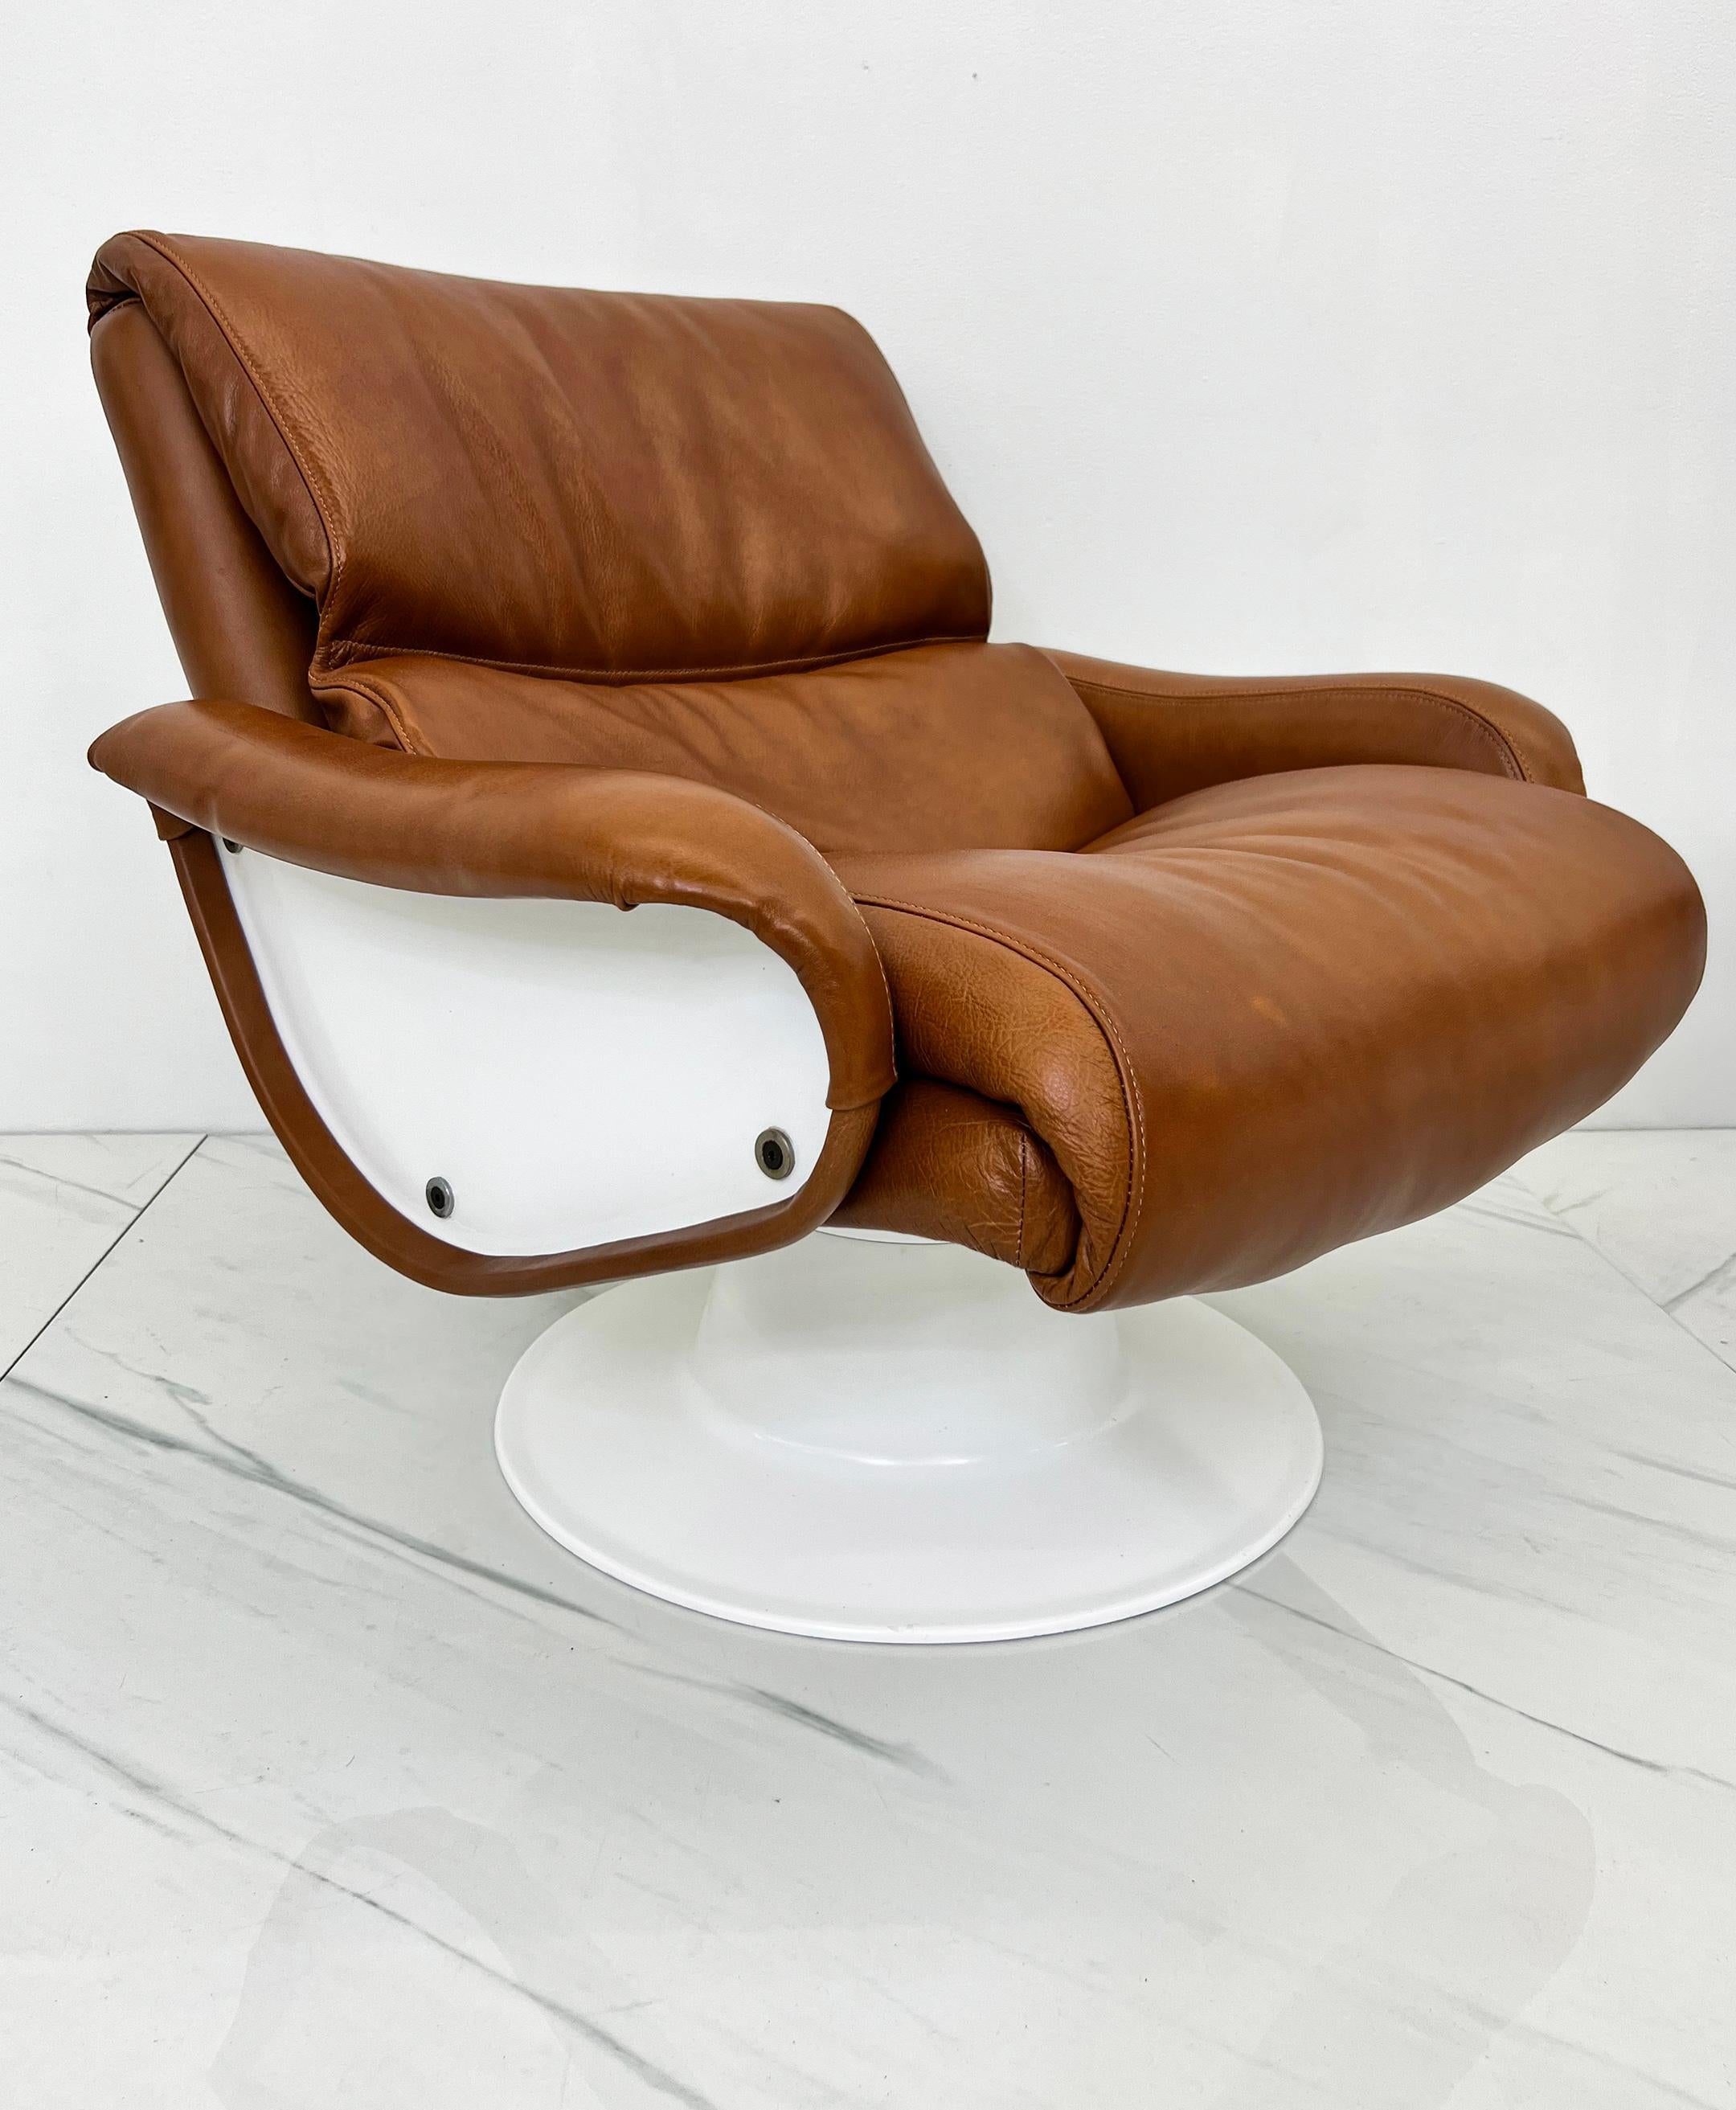 Leather Yrjo Kukkapuro Saturn Lounge Chairs Model B-175-18, 1960s, Finland For Sale